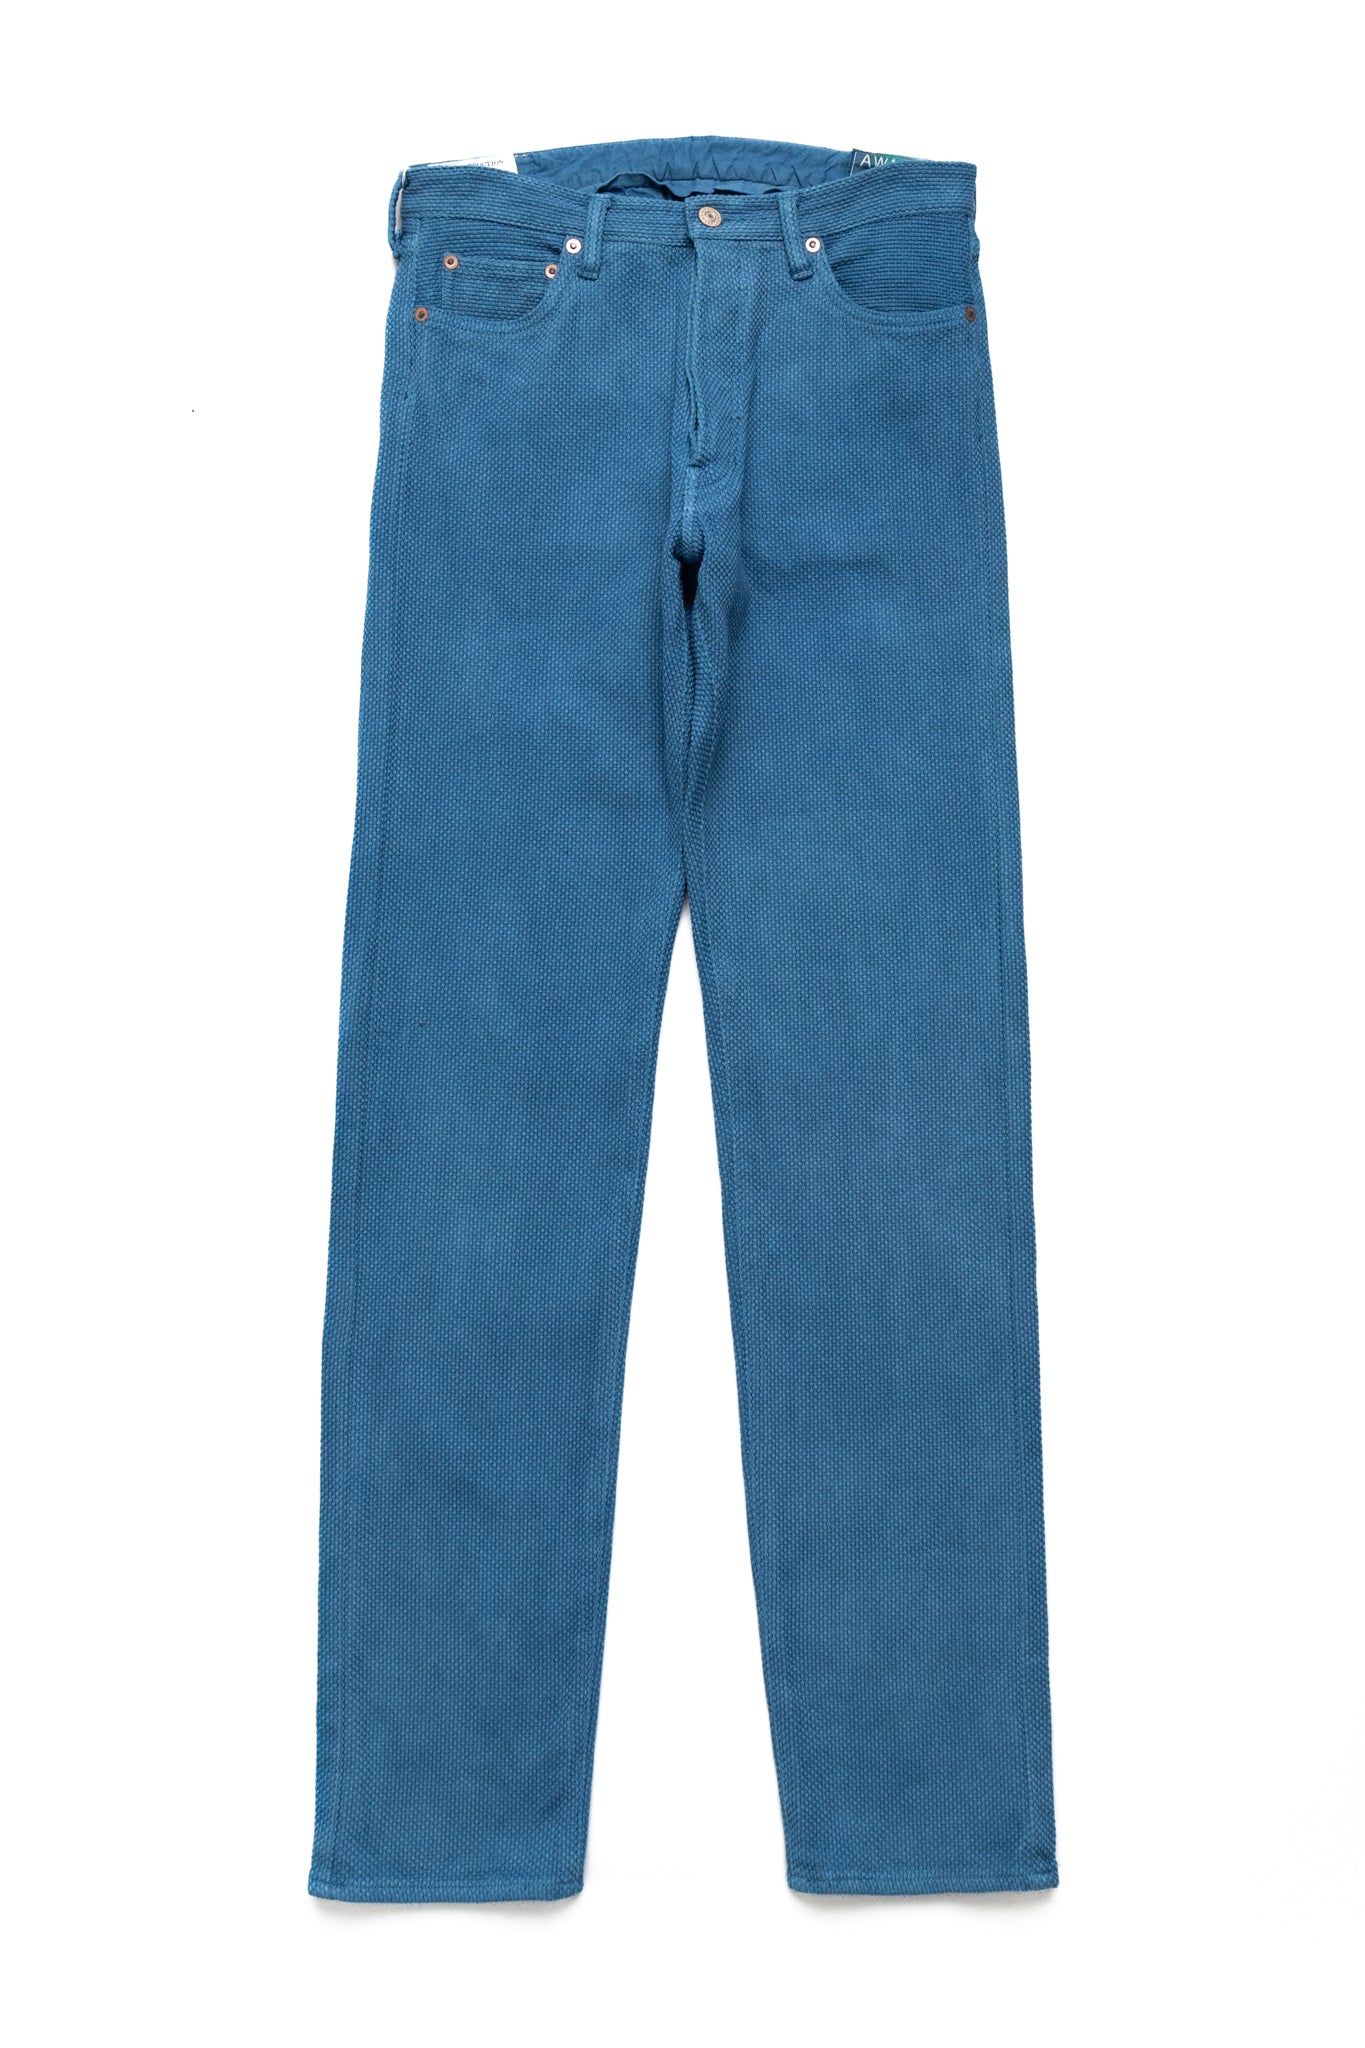 1880S Awa Shoai Hand-Dyed Sashiko Regular Tapered Jeans